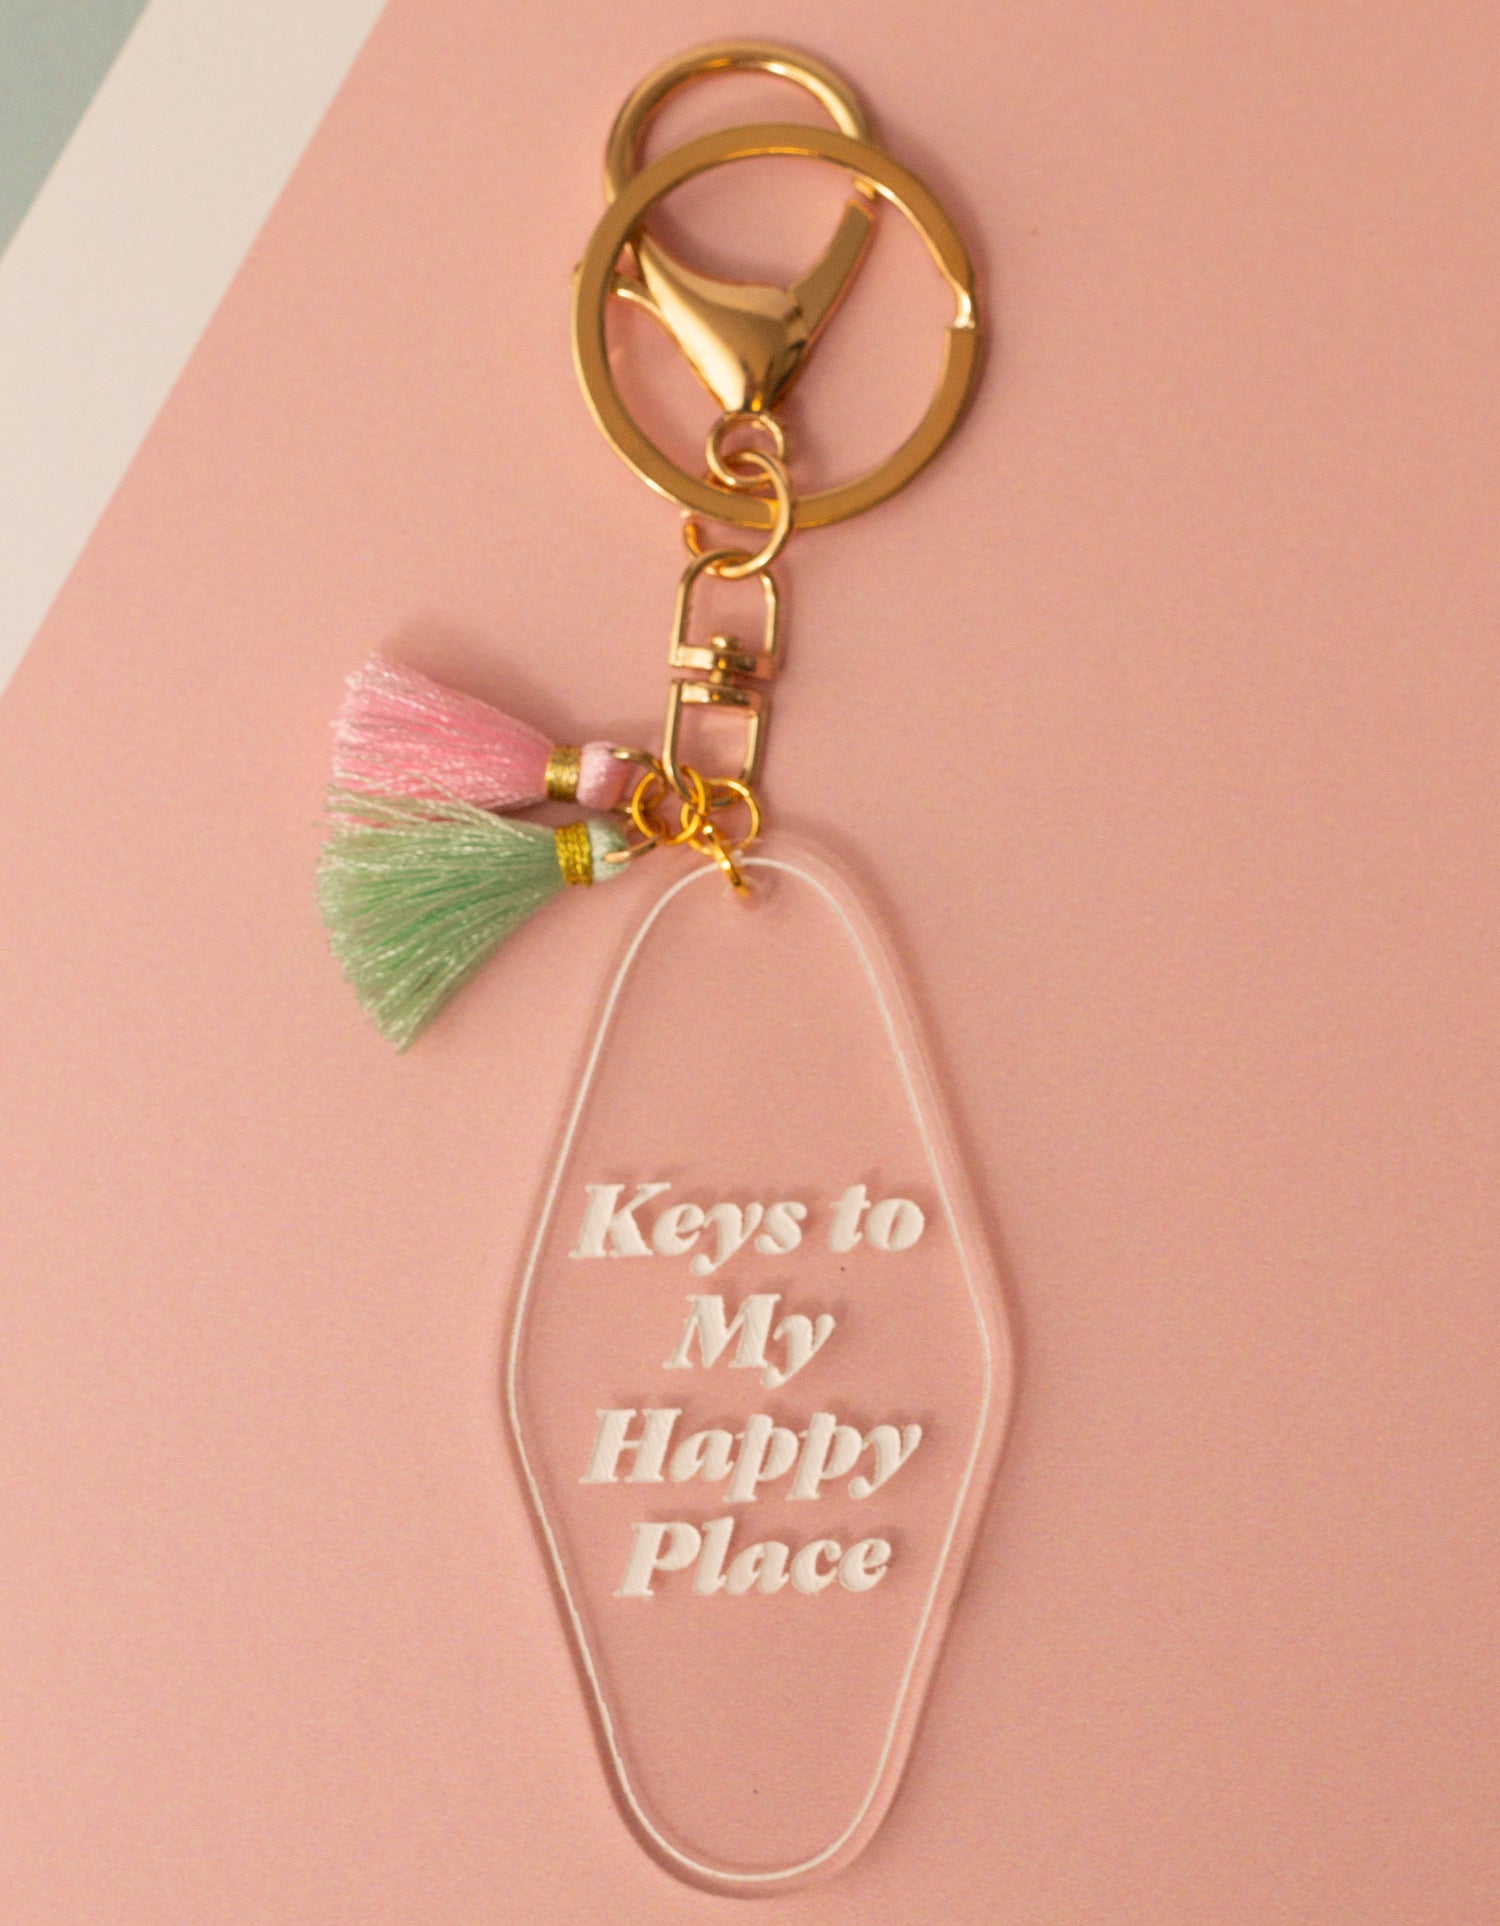 Keys to My Happy Place - Vintage Style Acrylic Keychain